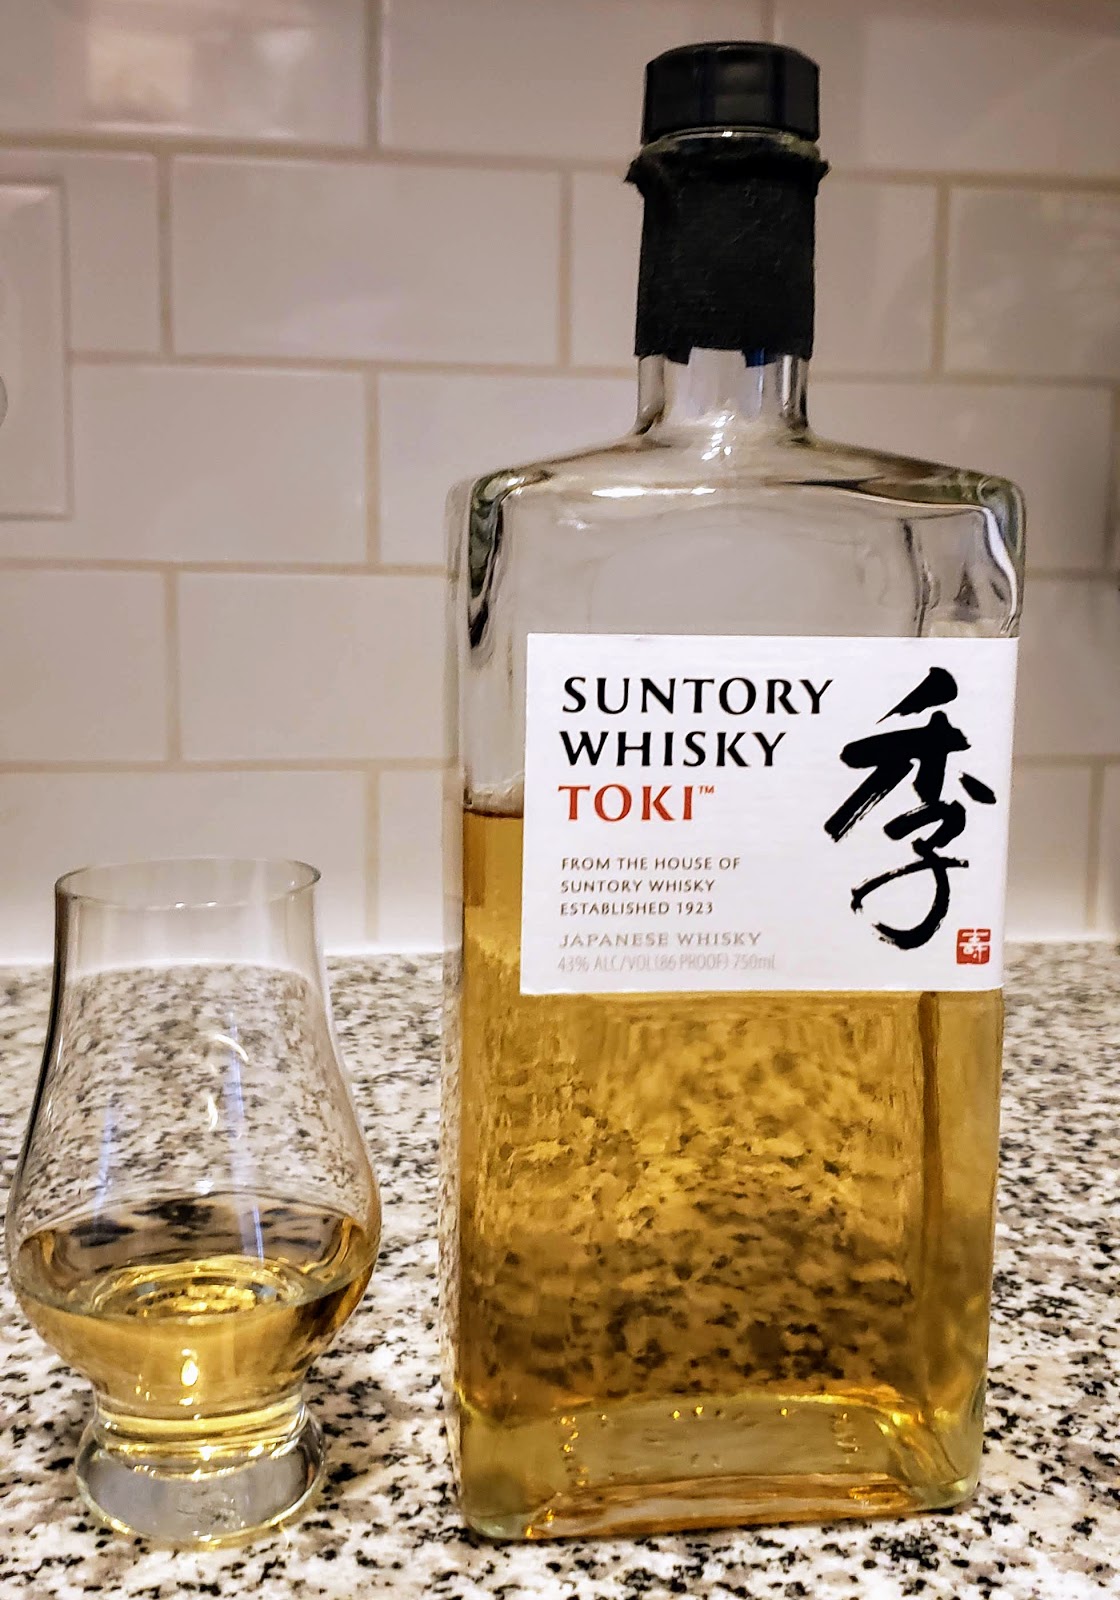 Columbus Bourbon Suntory Toki Japanese Whisky Review